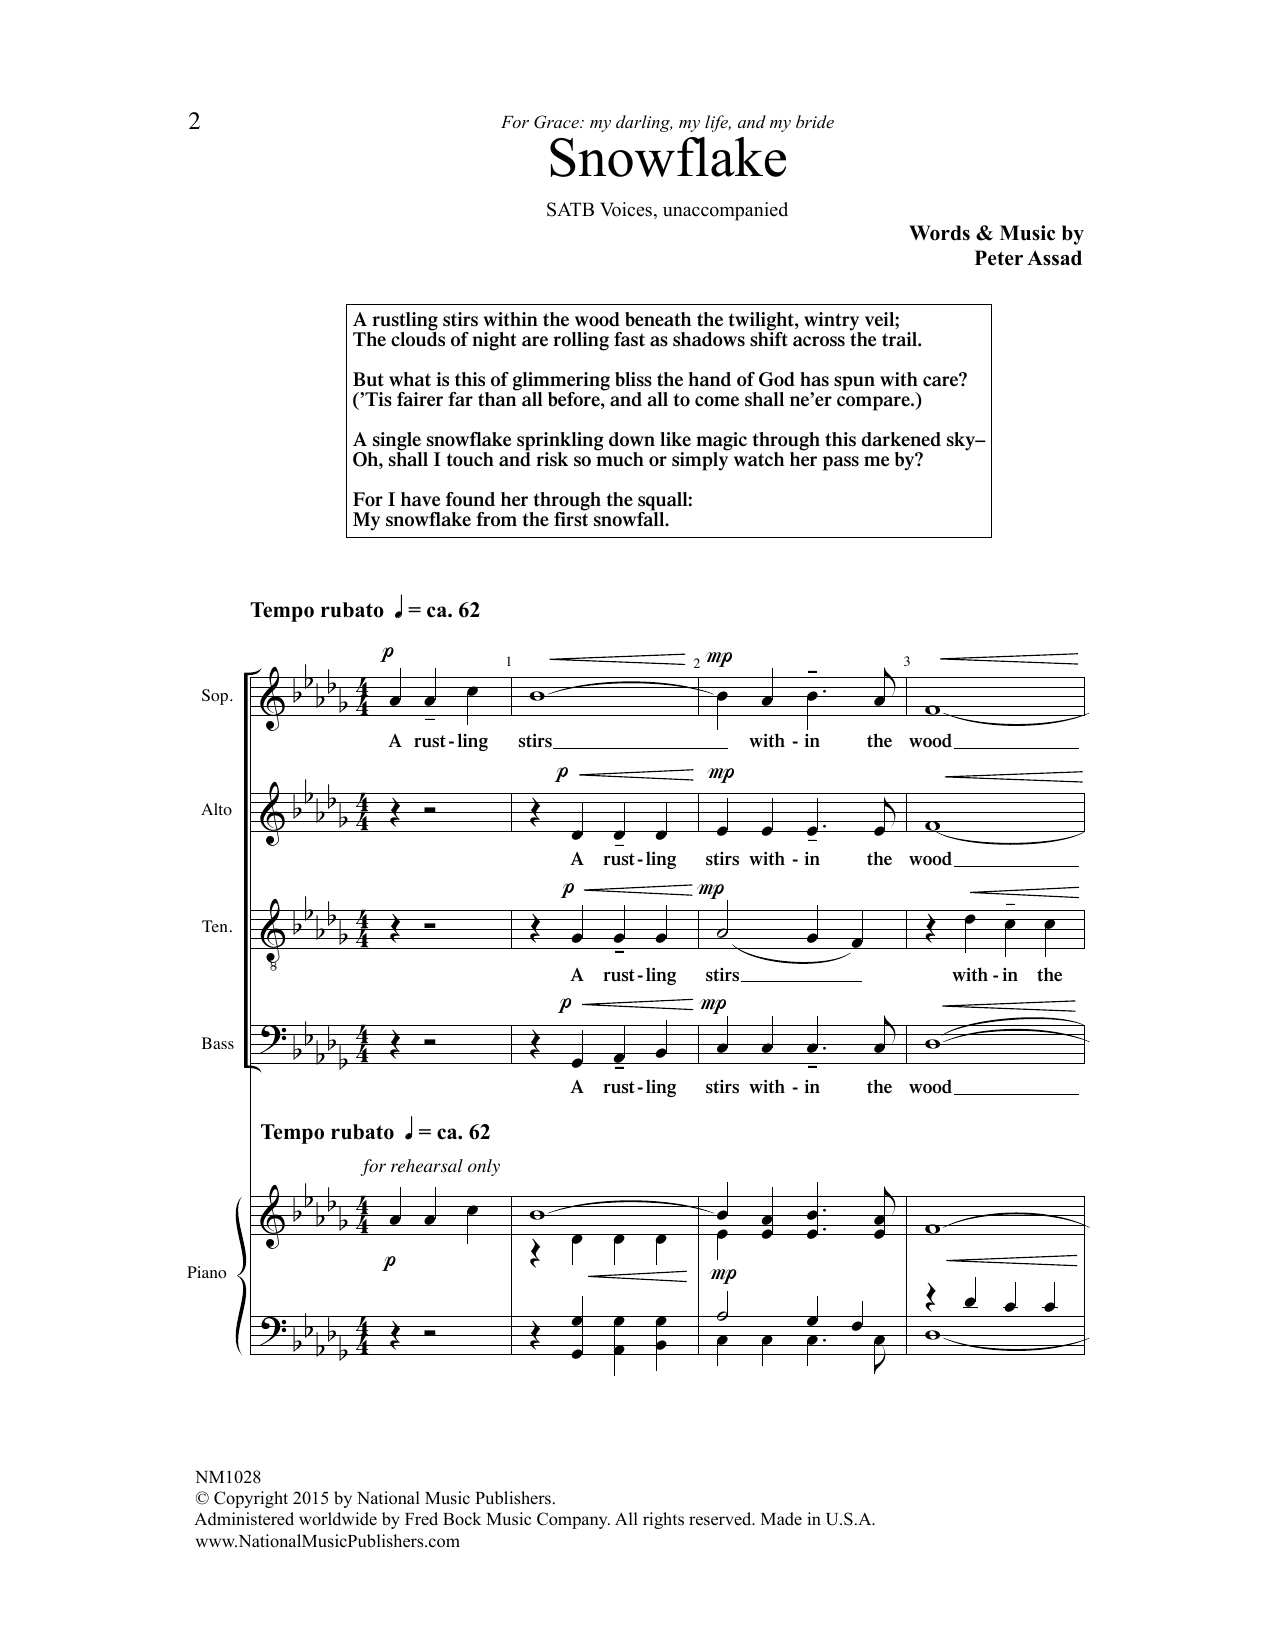 Peter Assad Snowflake Sheet Music Notes & Chords for SATB Choir - Download or Print PDF